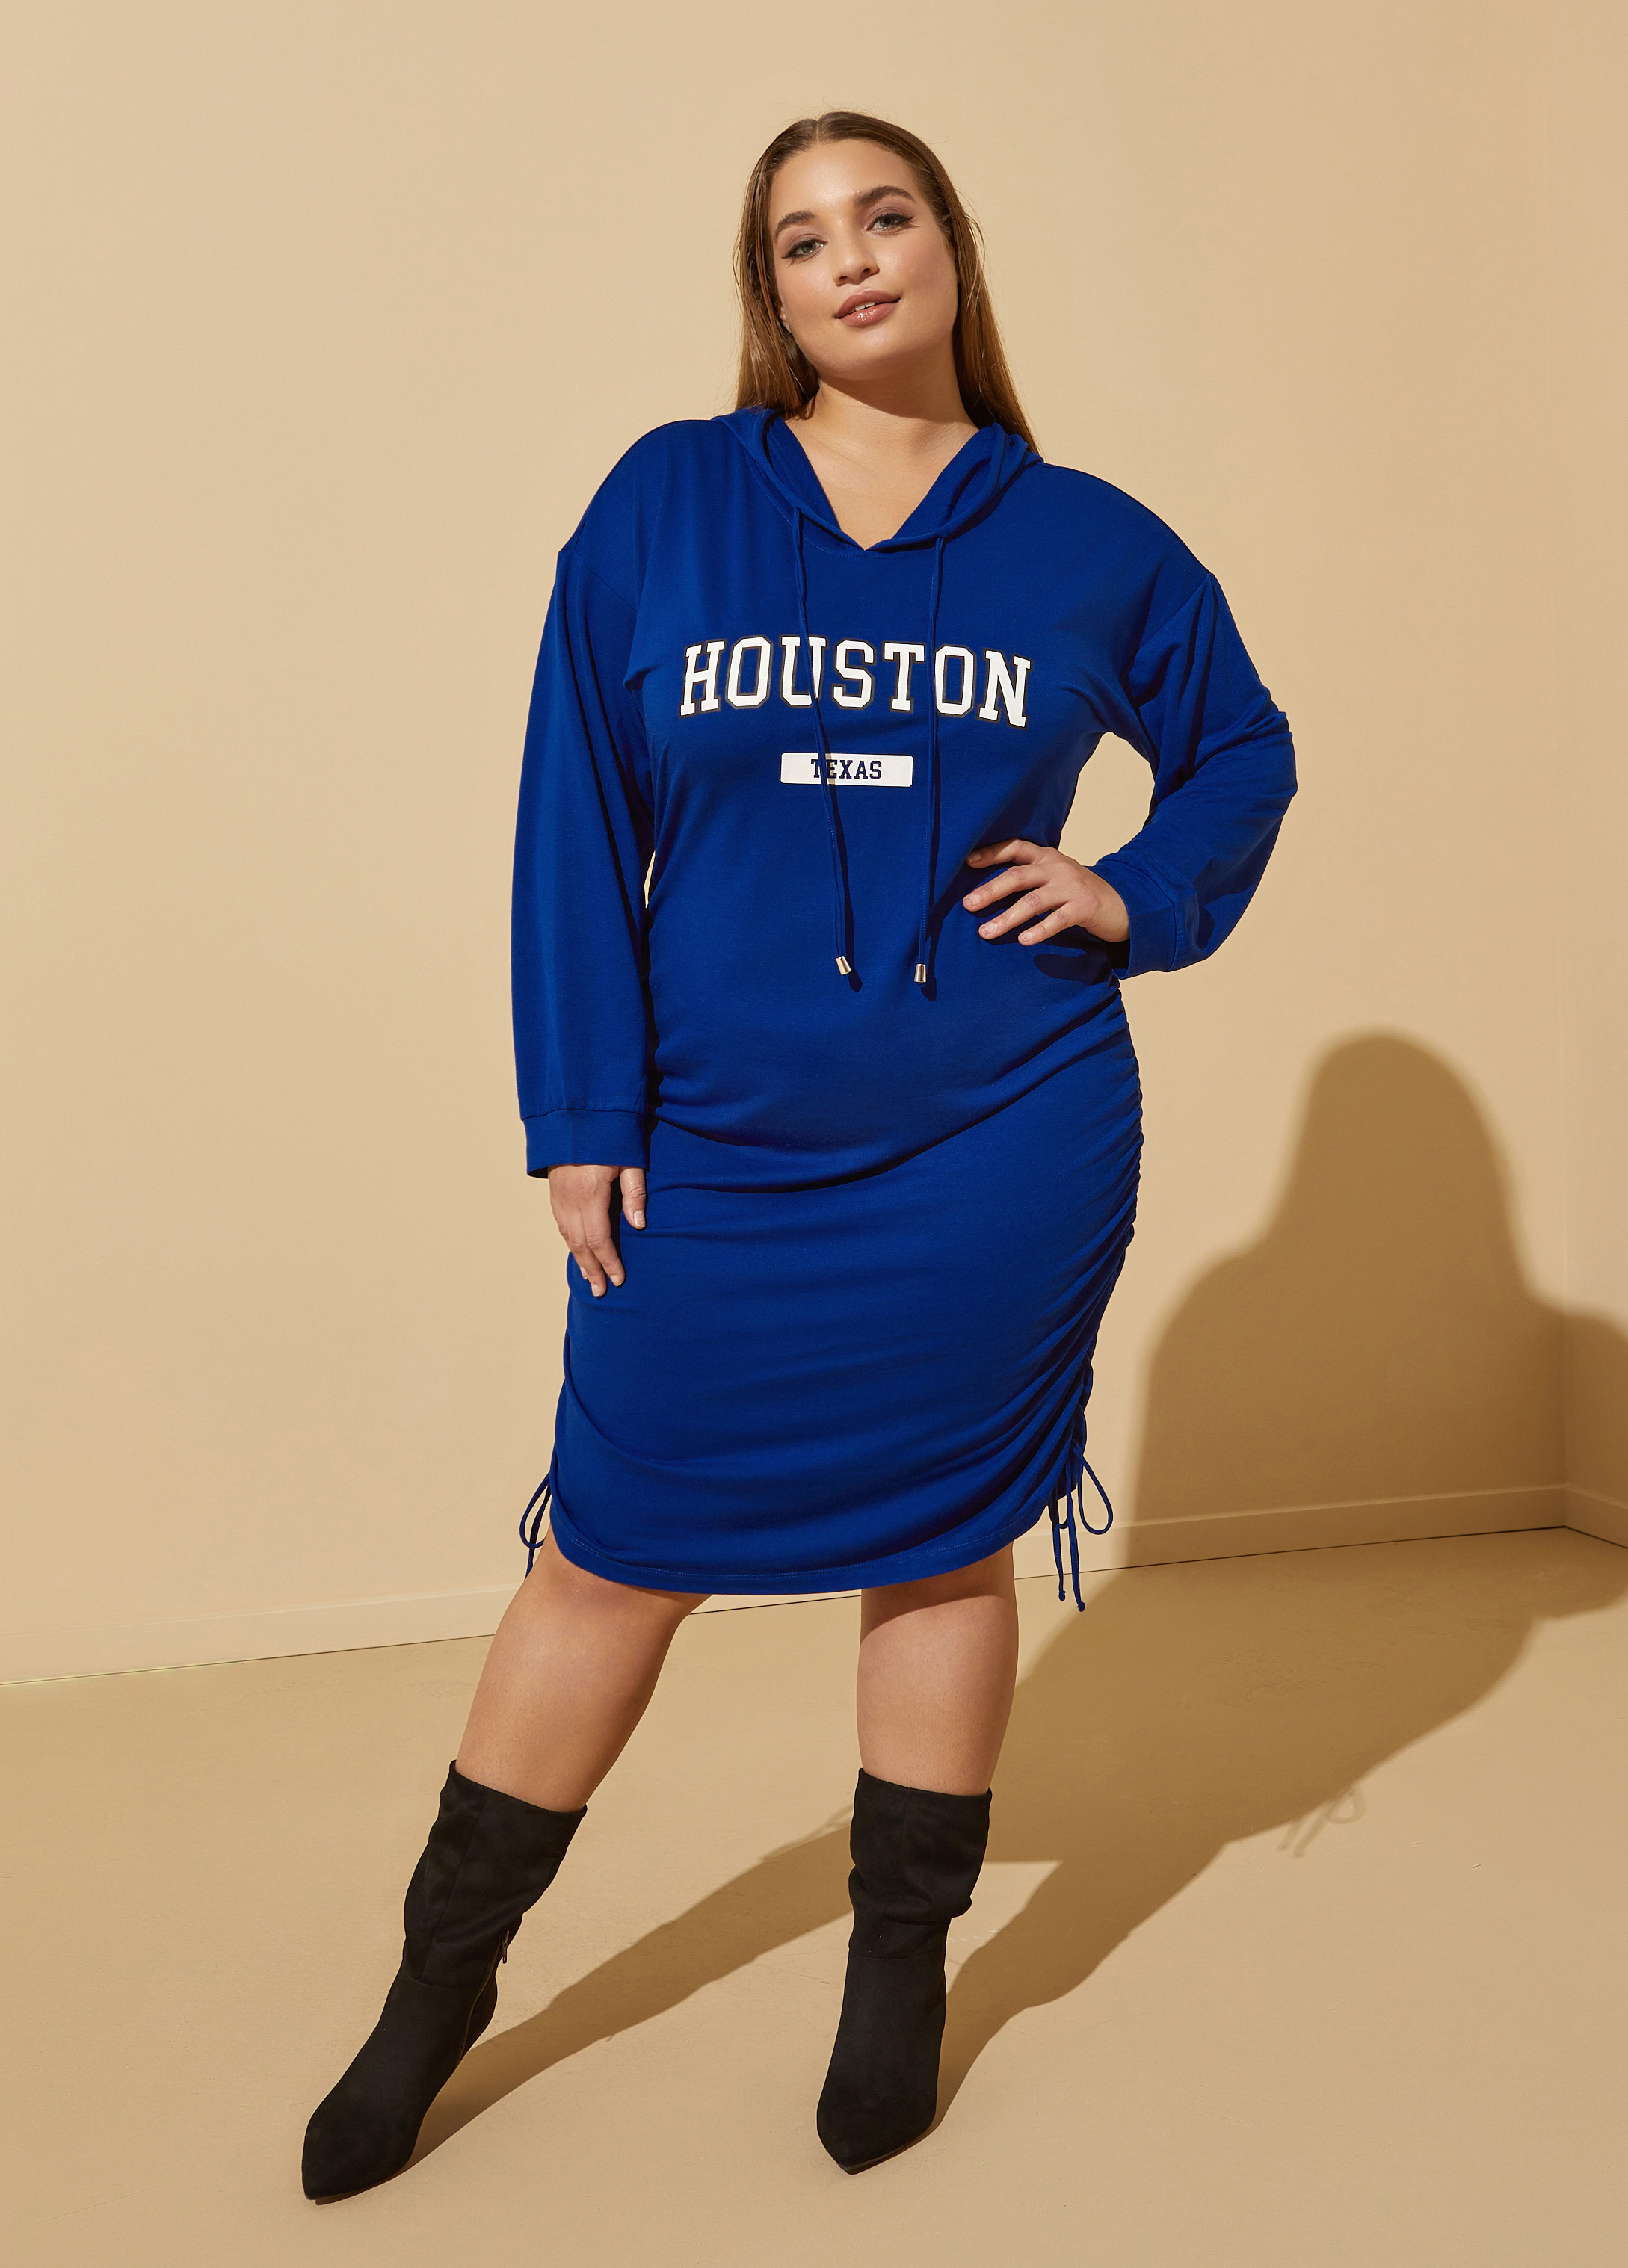 Plus Size Houston Ruched Hoodie Dress, BLUE, 14/16 - Ashley Stewart